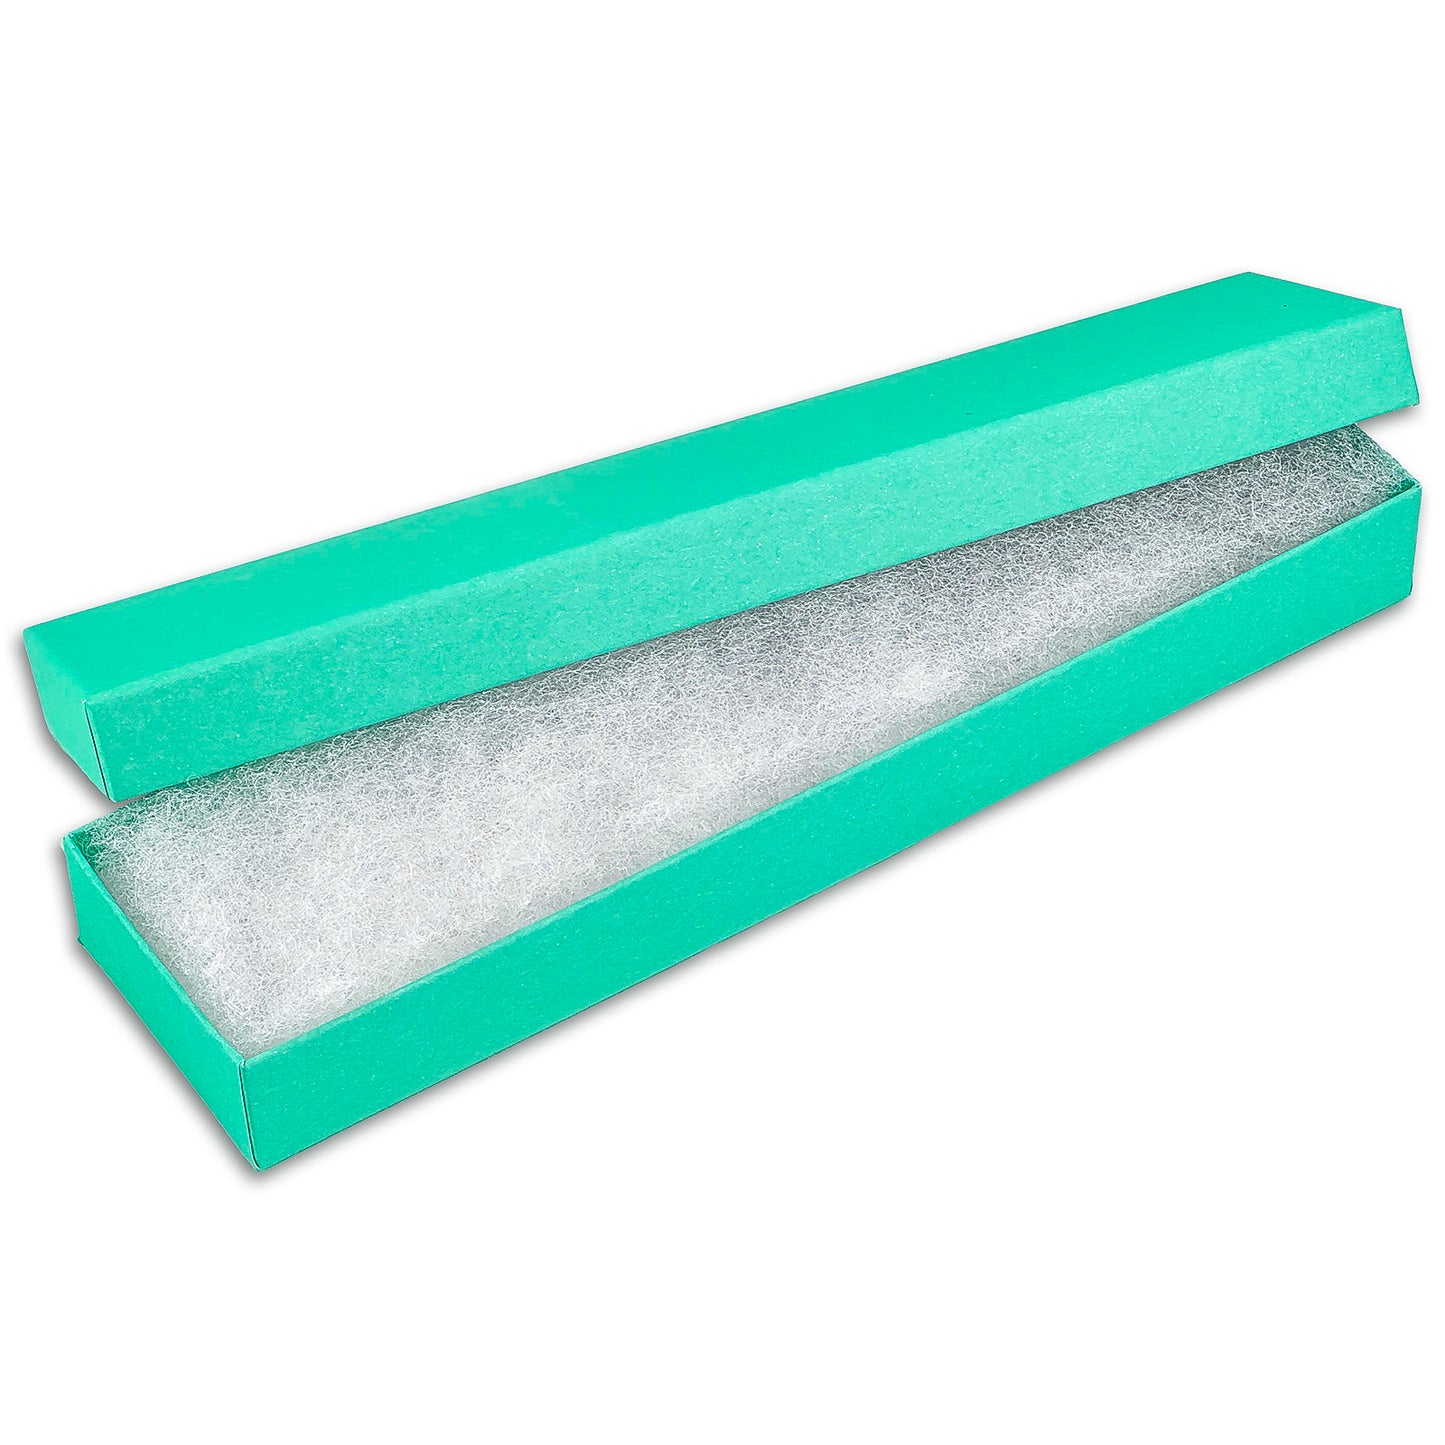 8" x 2" x 1" H Teal Green Paper Bracelet Box